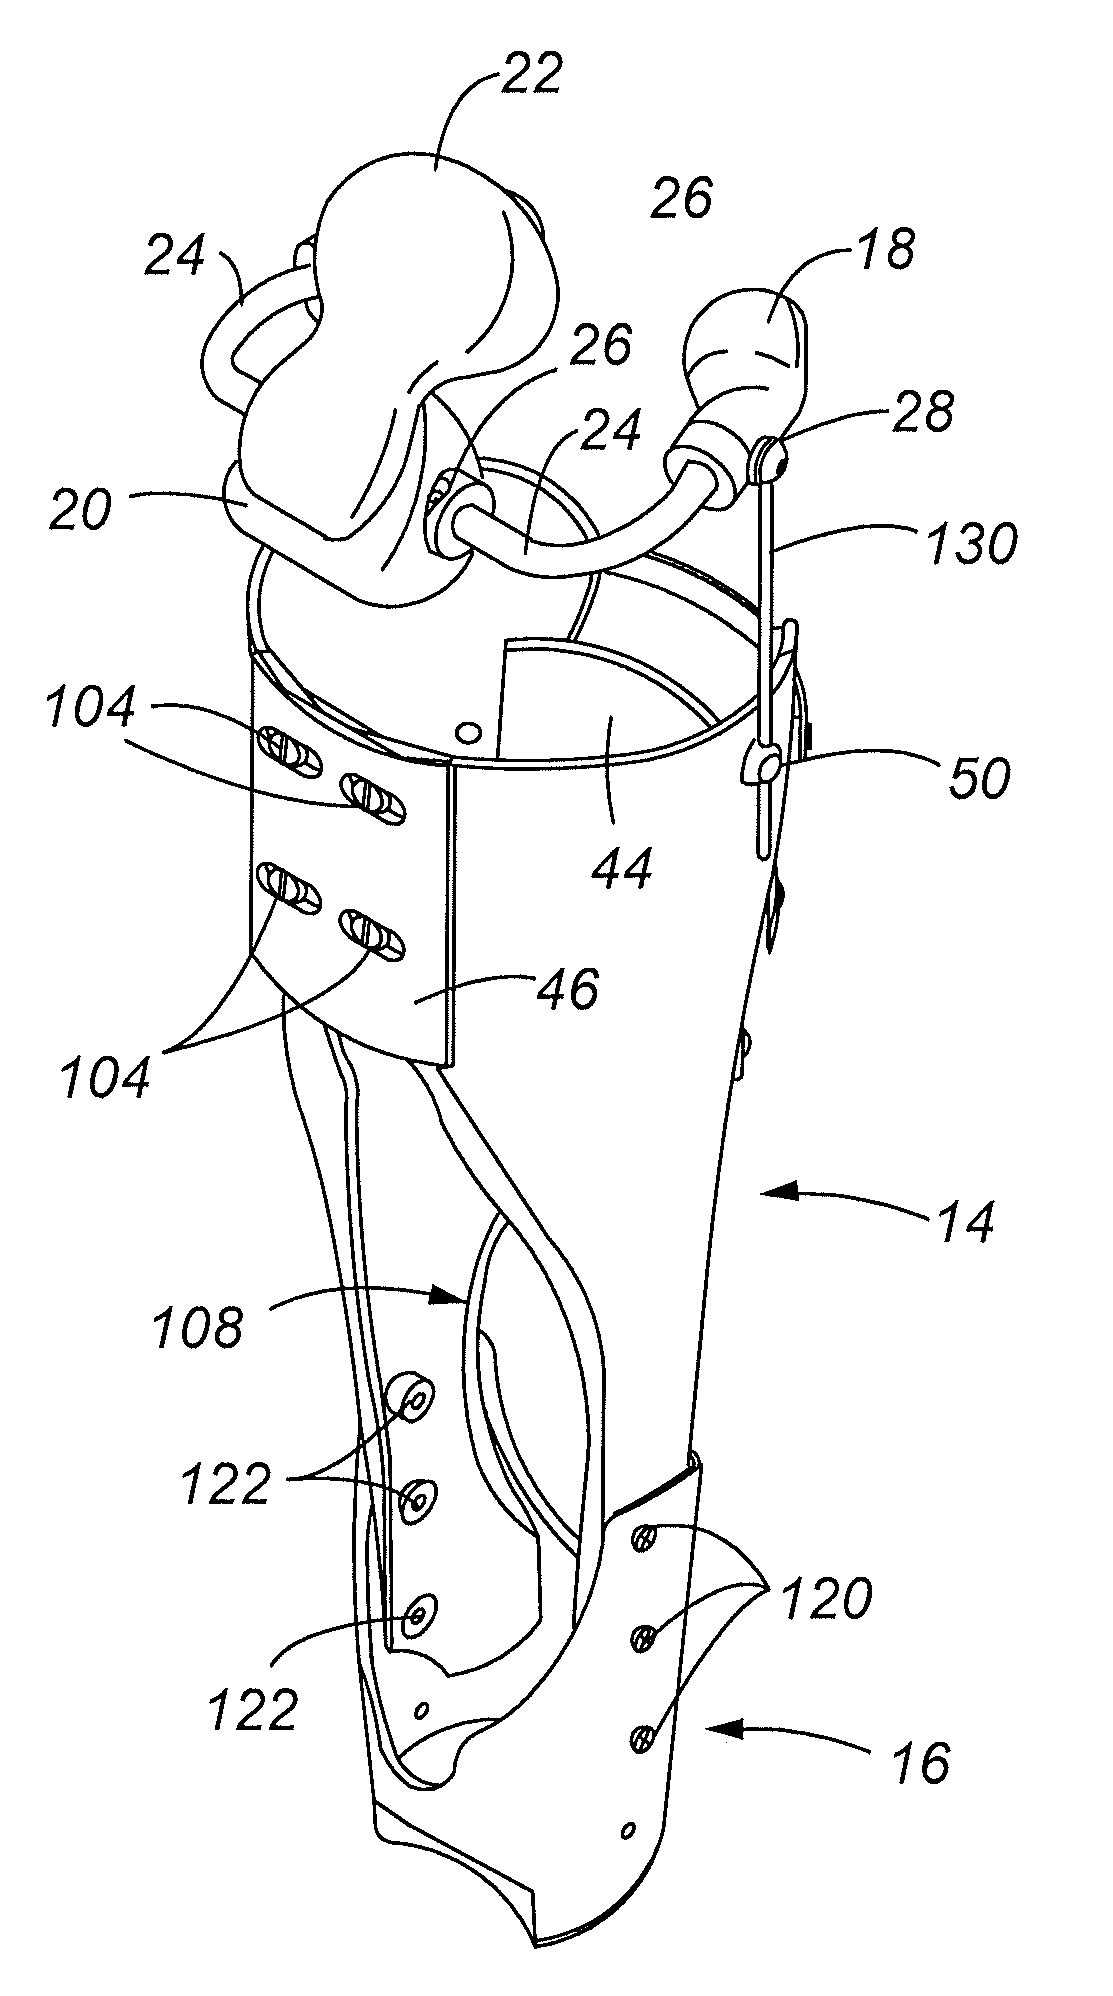 Anatomically-configured adjustable upper extremity prosthetic device